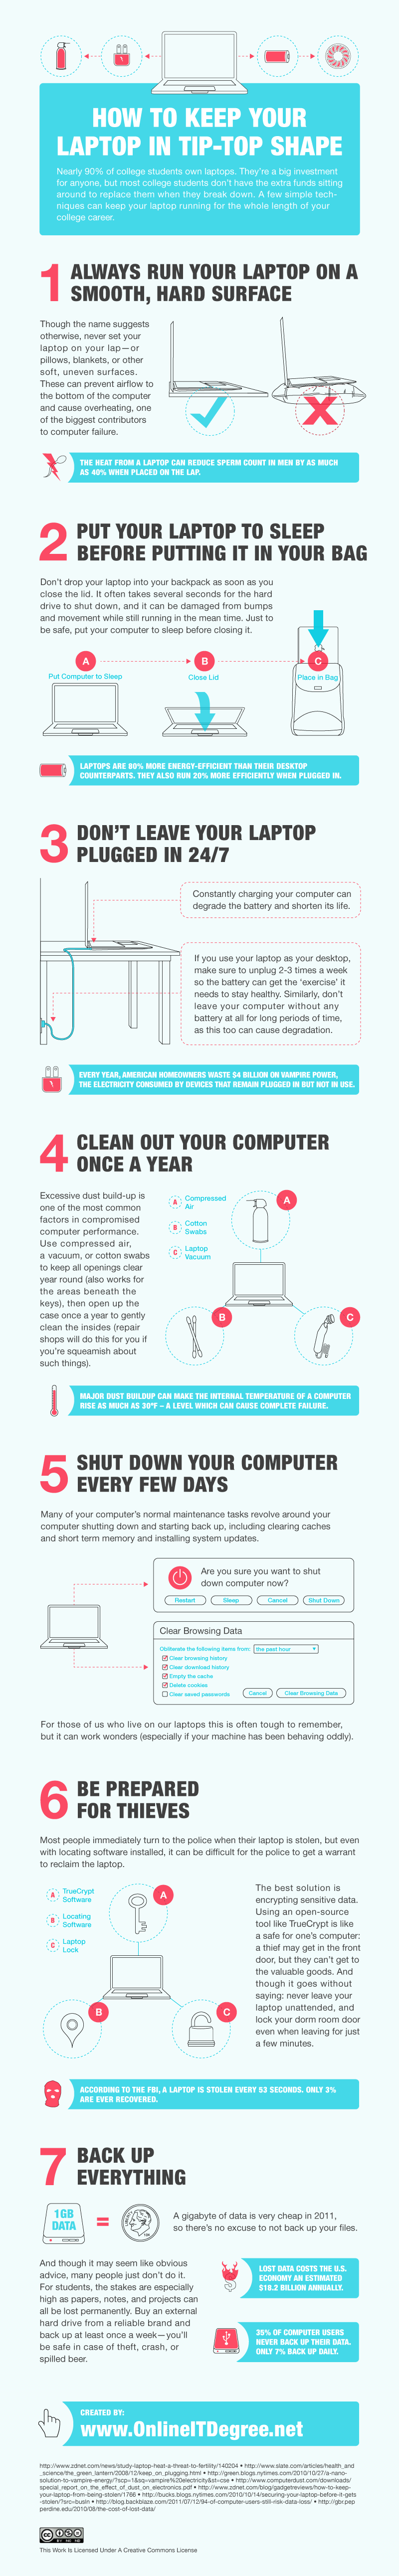 Laptop Safety Tips